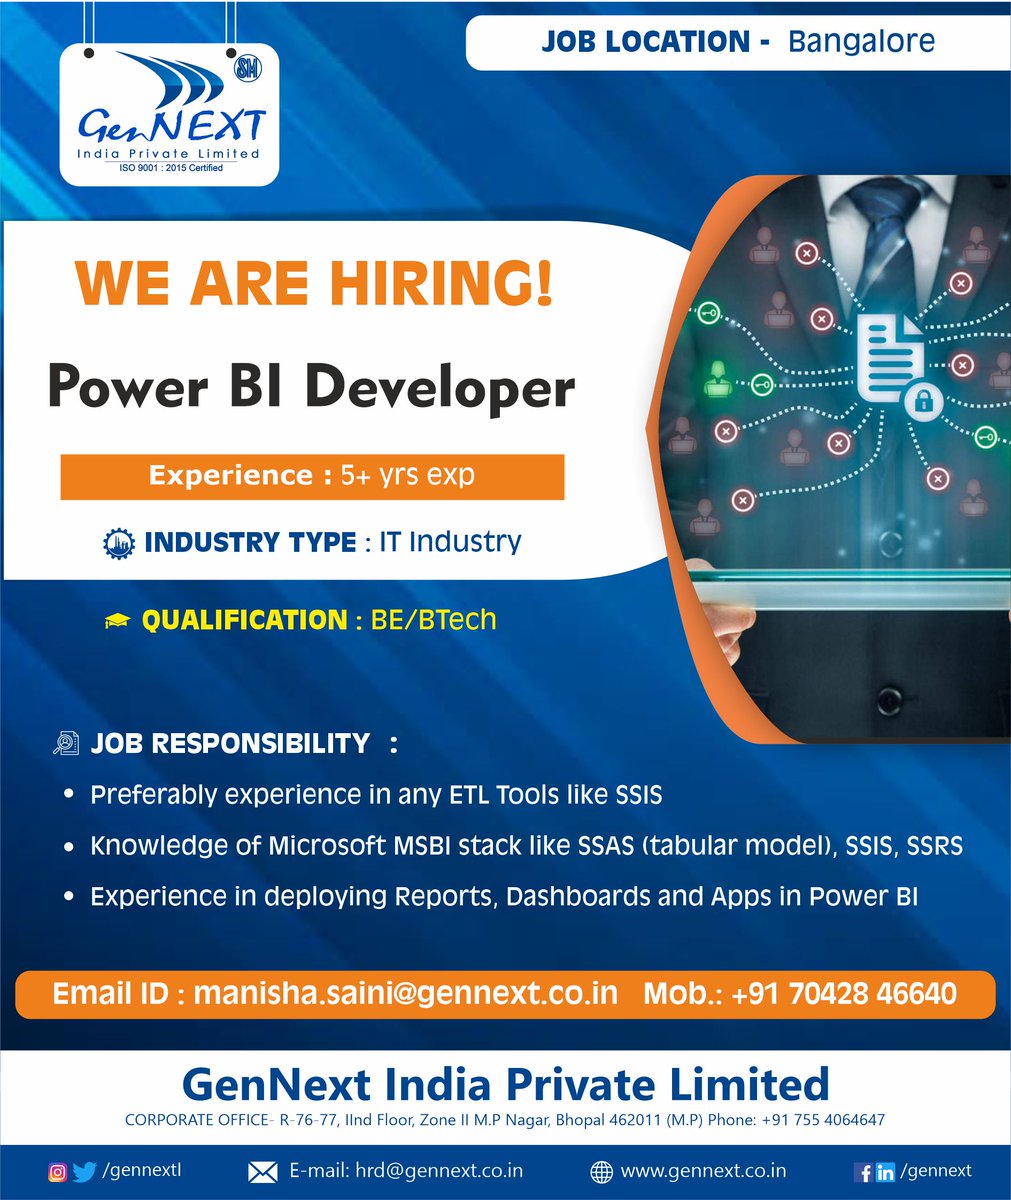 #urgentrequirement
Position: Power BI Developer

#powerbideveloperjob #bangalorejob #be #btech #ssis #ssrs #hiring2023 #jobalert #jobalerts #job #work #jobalerts #vacancyjob #jobneed #liabilties #gennext #gennexthiring #gennextjob